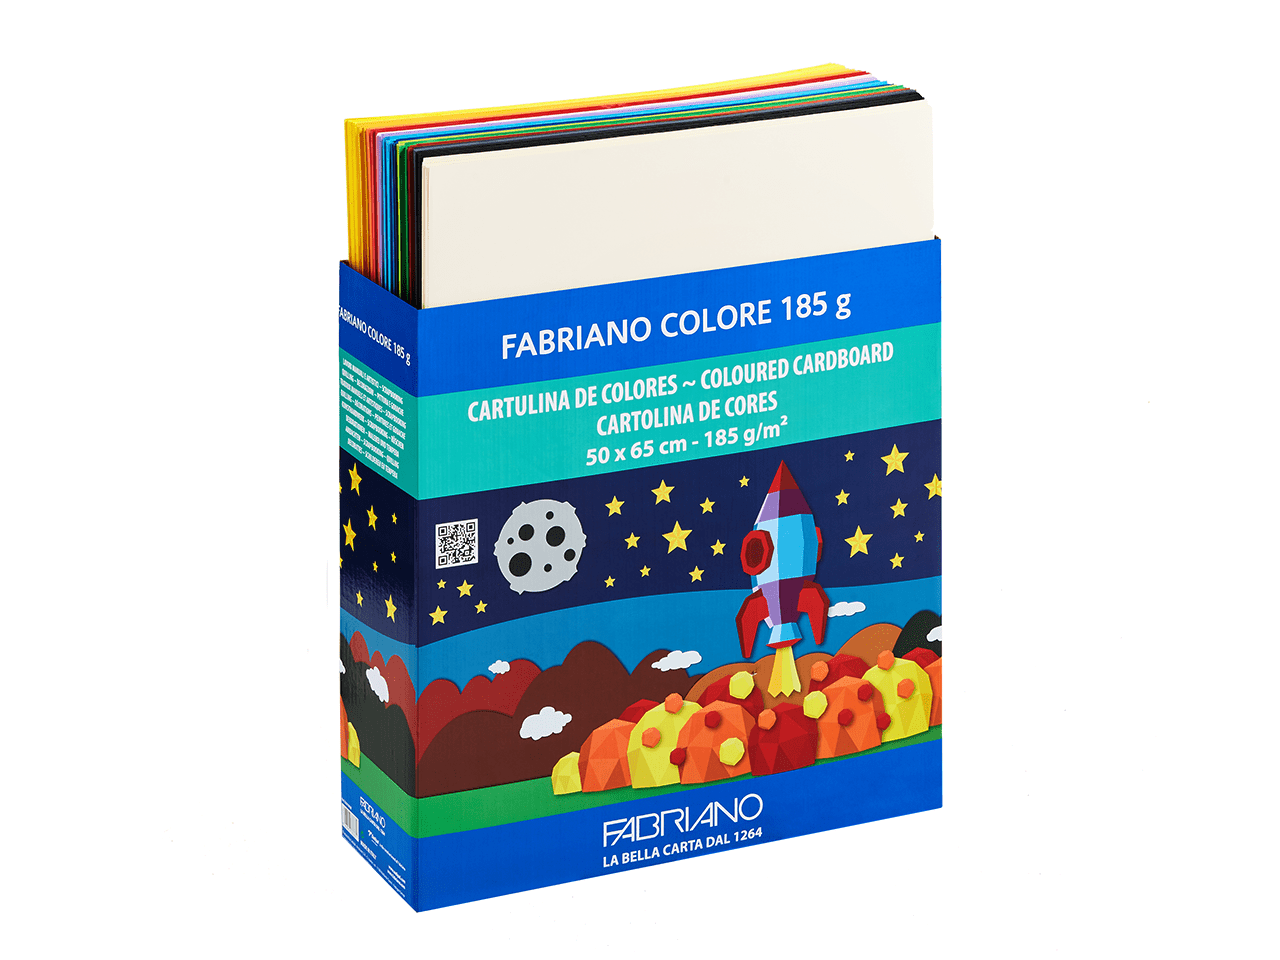 Cartulina fabriano a3 185g colores pastel - Librería Kolima